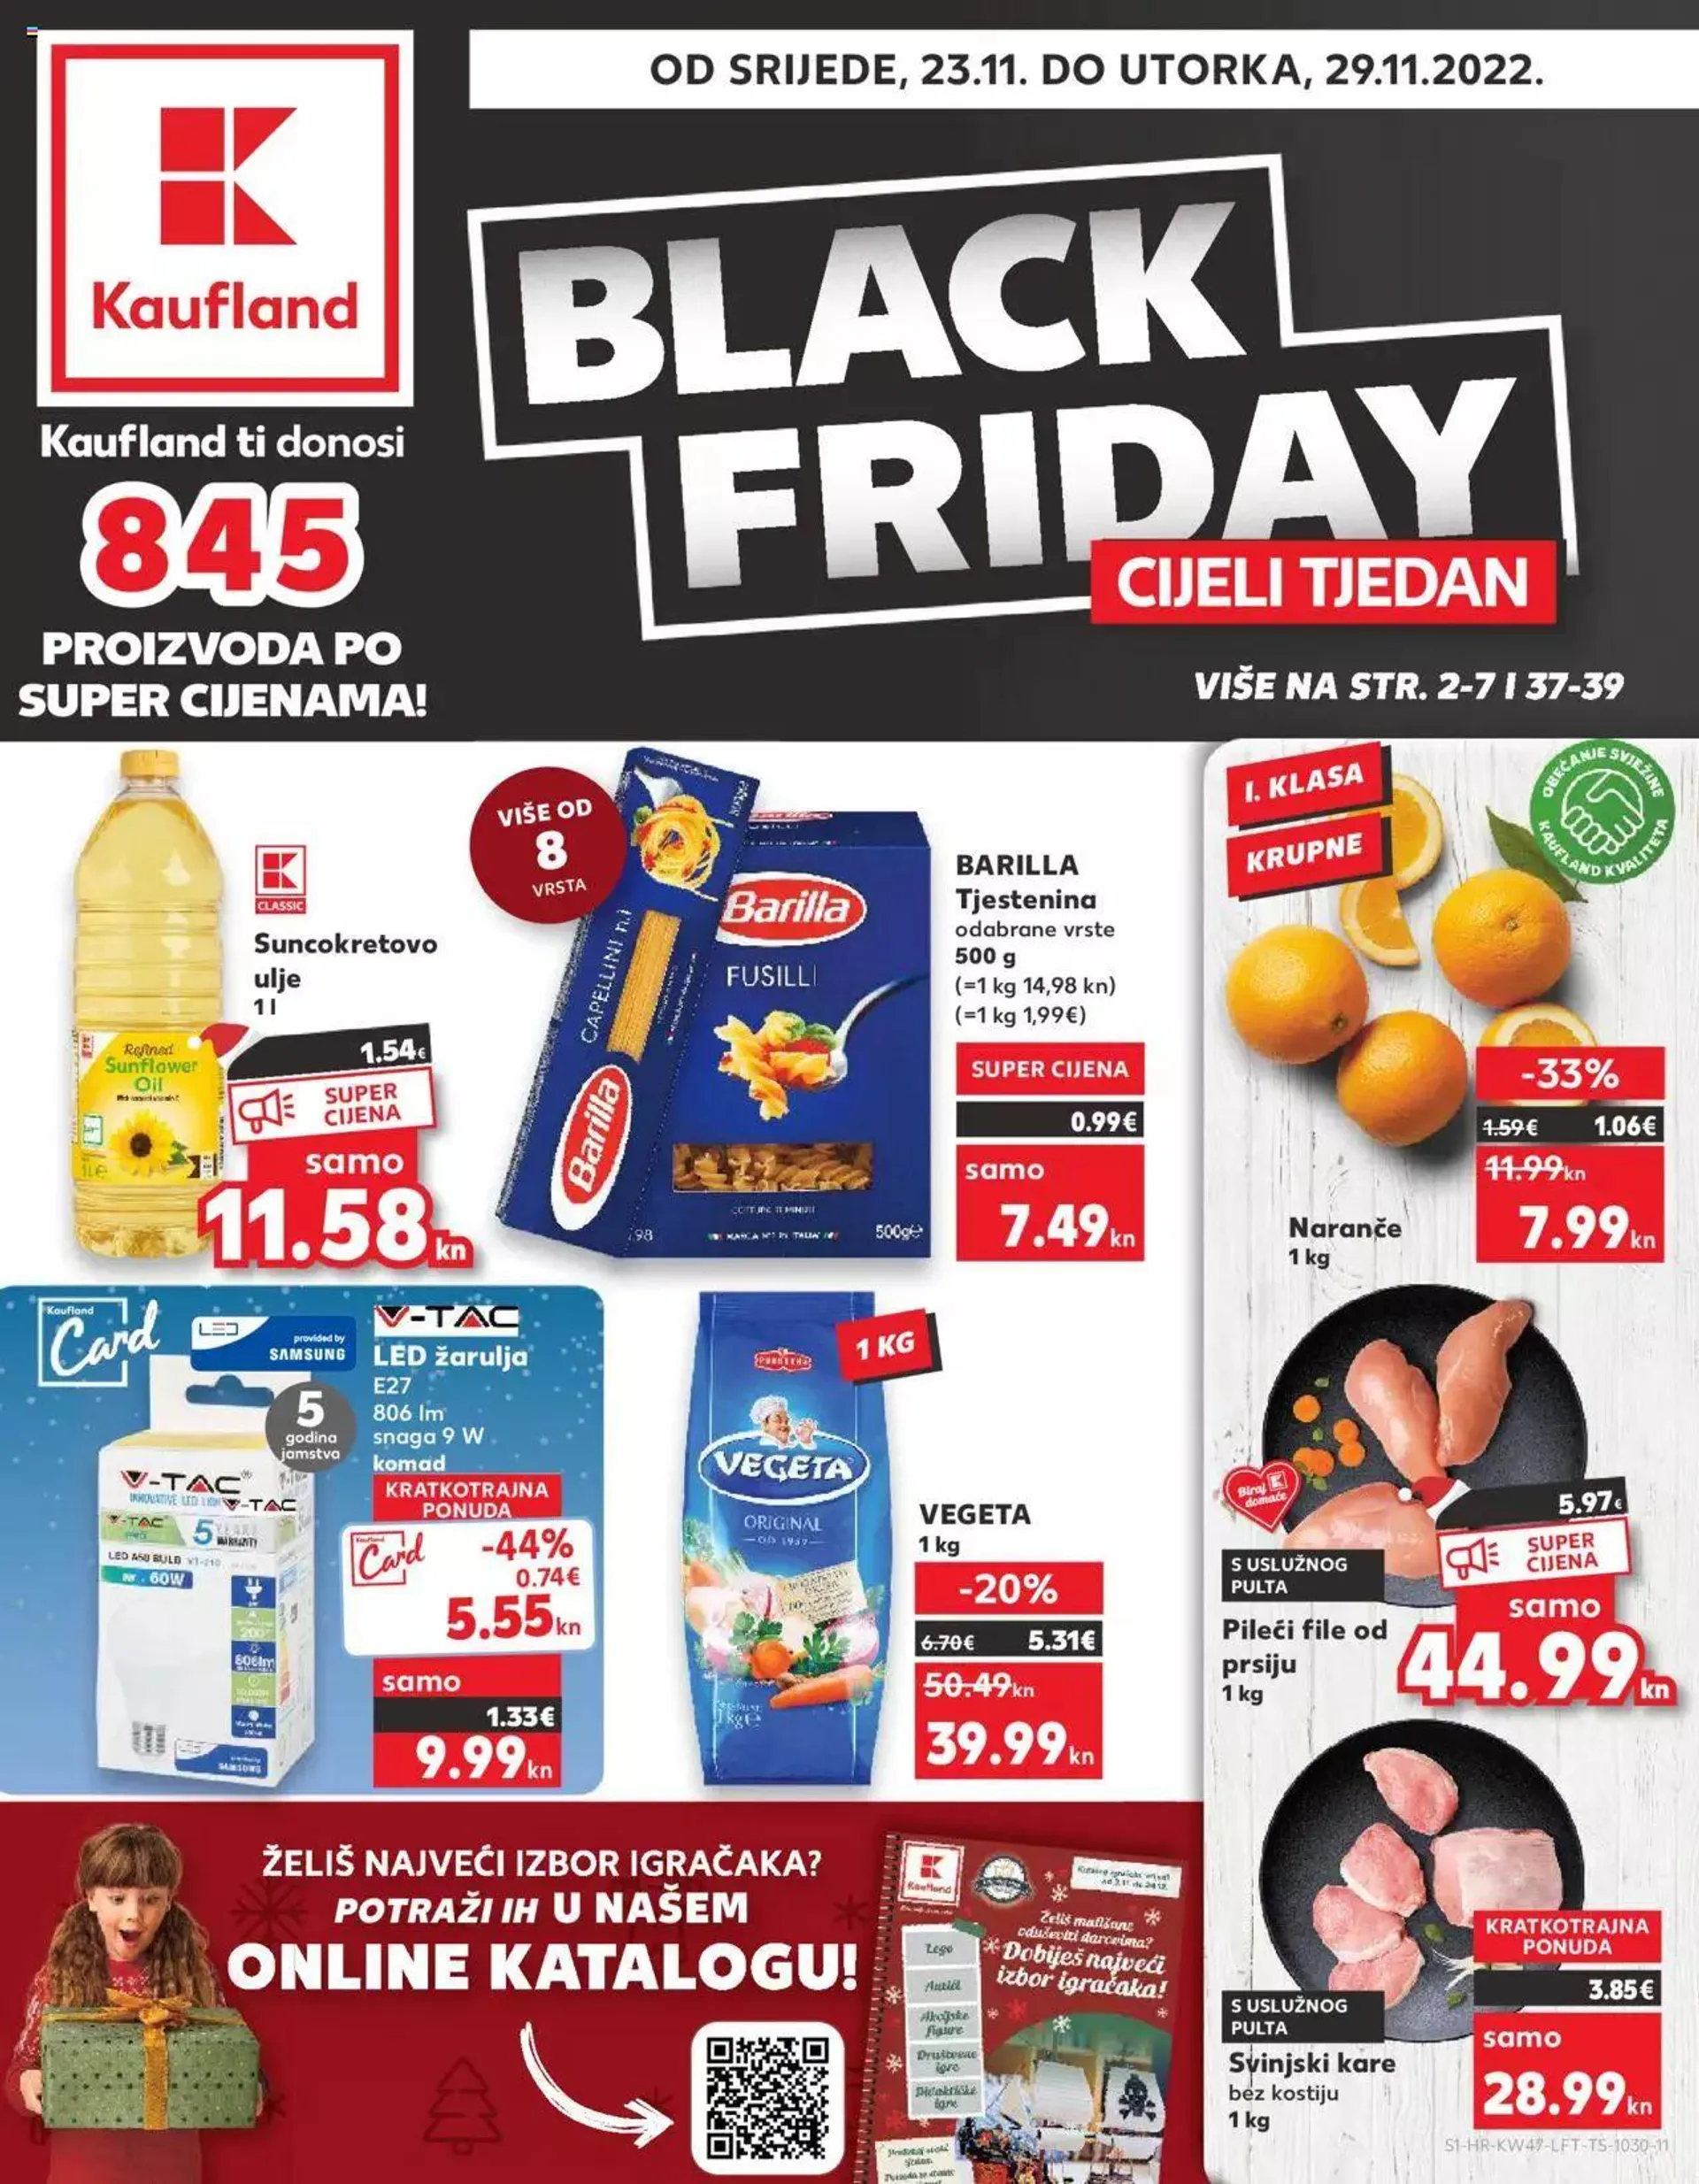 Kaufland - Black Friday - 0